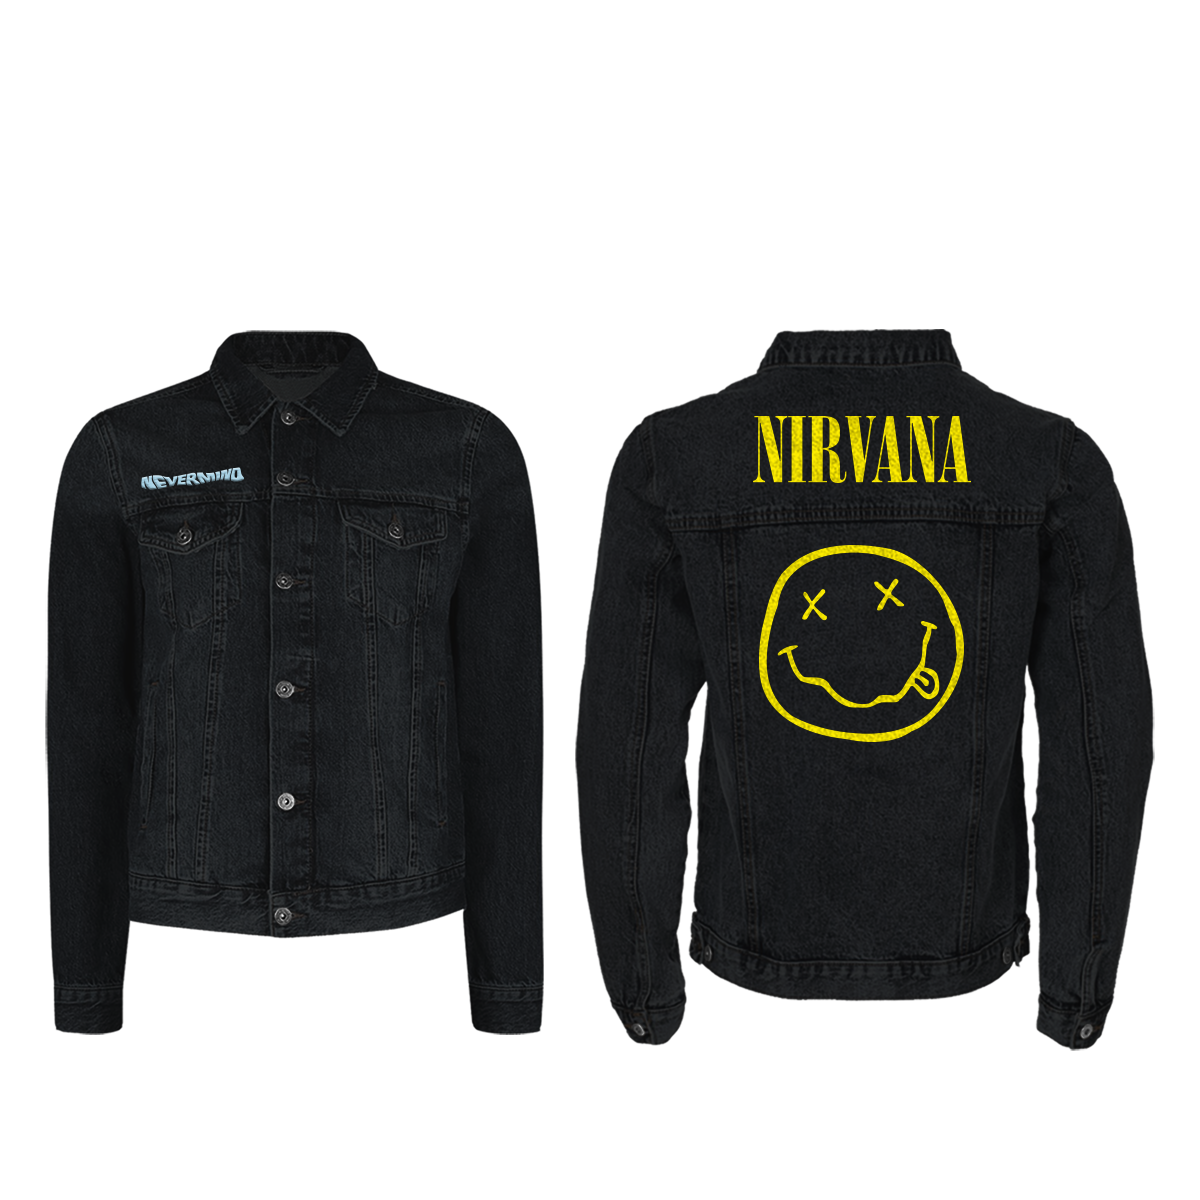 NVDJ1 - Nirvana Store